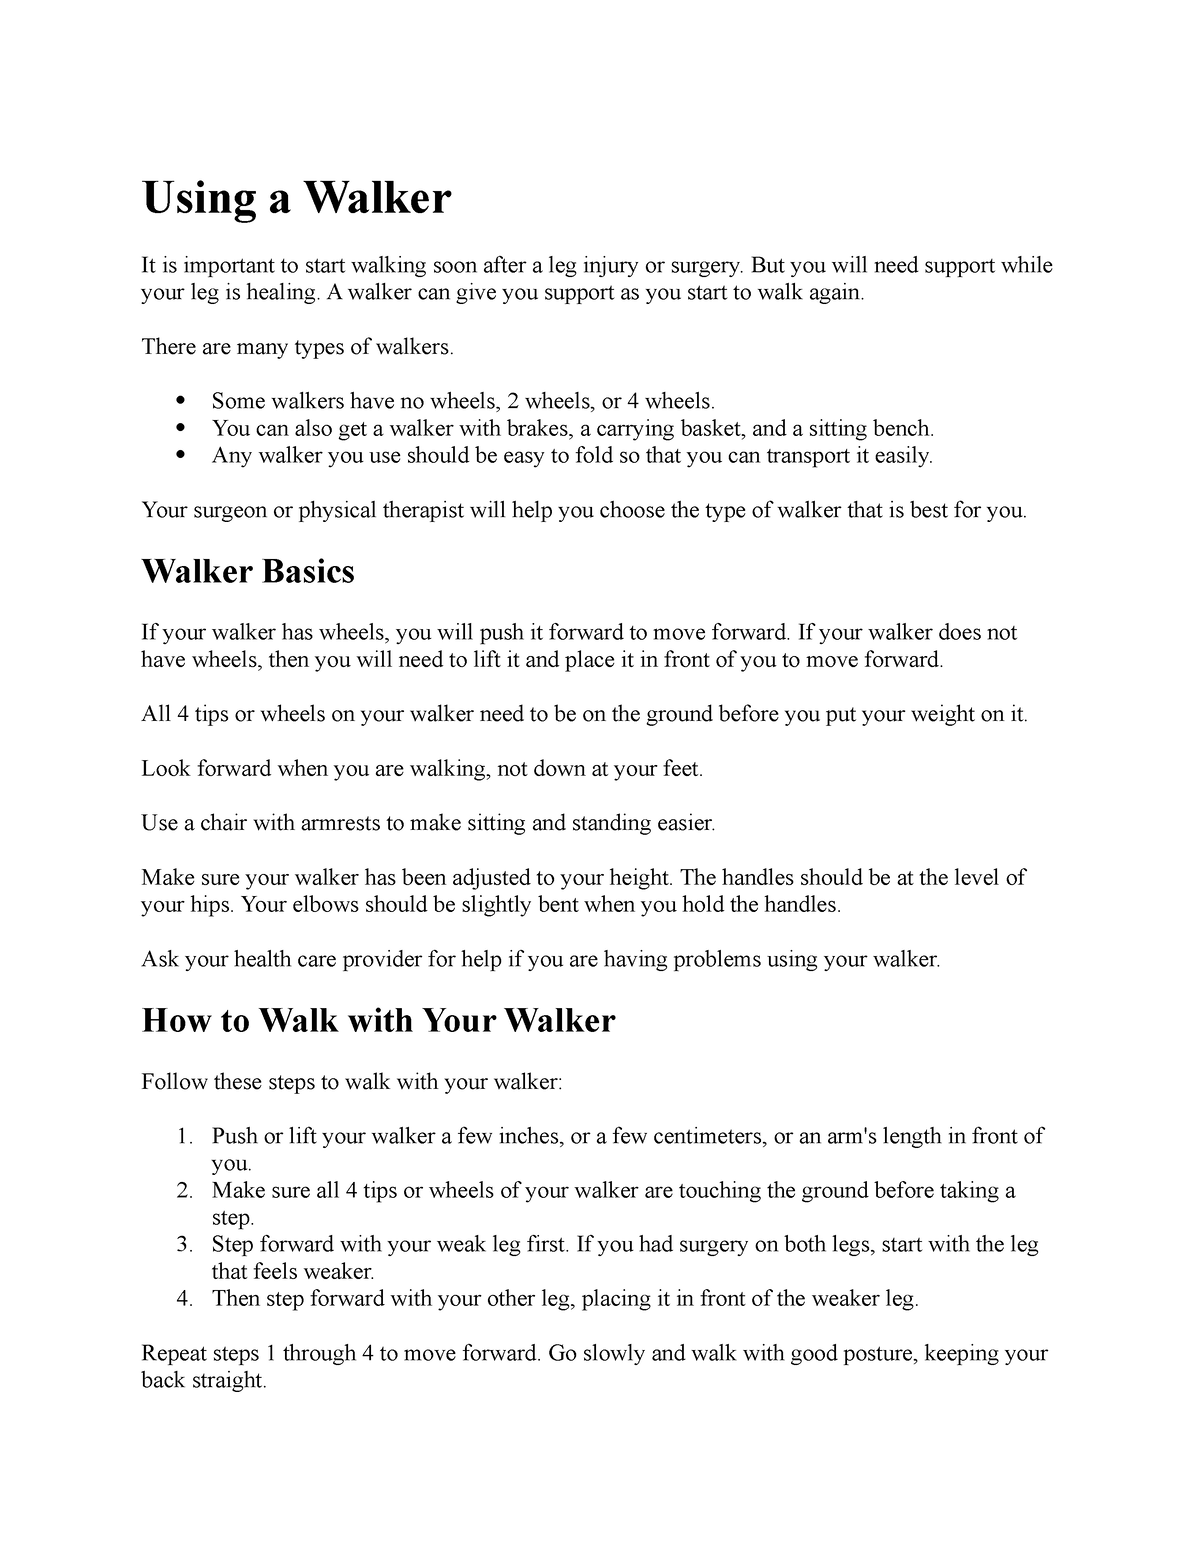 Using a walker - Gerontology Nursing Notes - Using a Walker It is ...